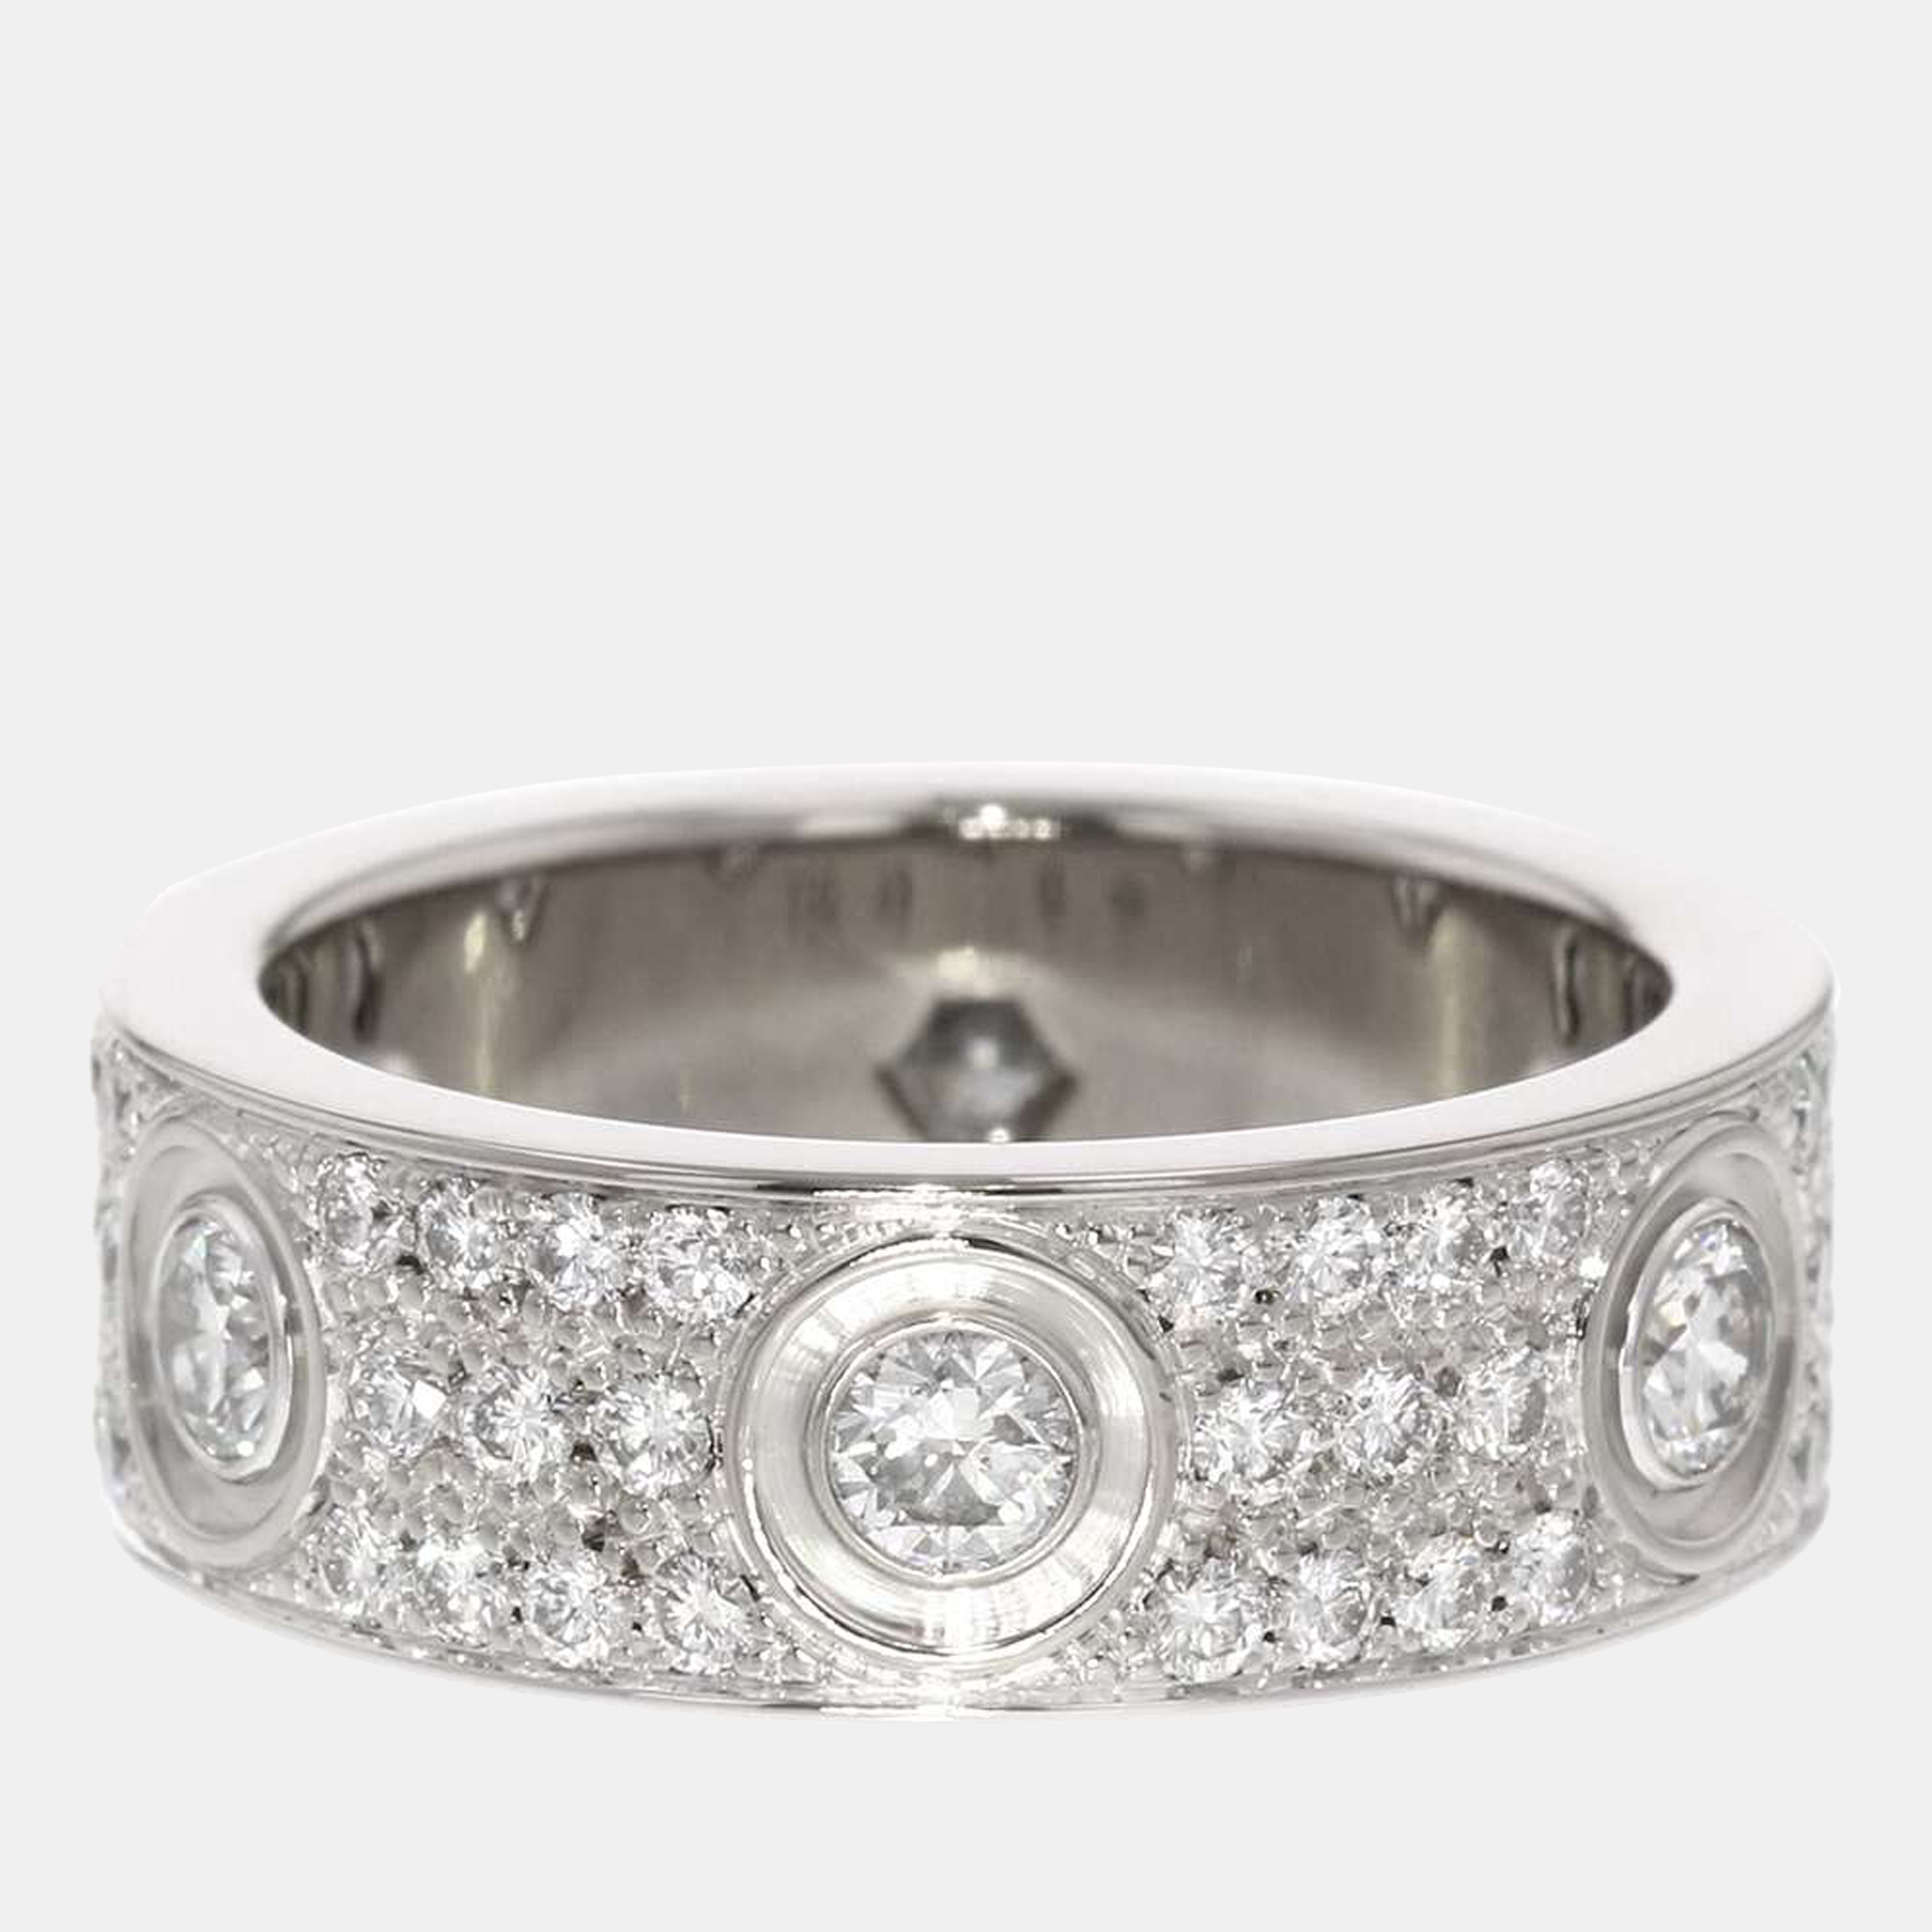 Cartier Love Pave 18K White Gold Diamond Ring EU 49